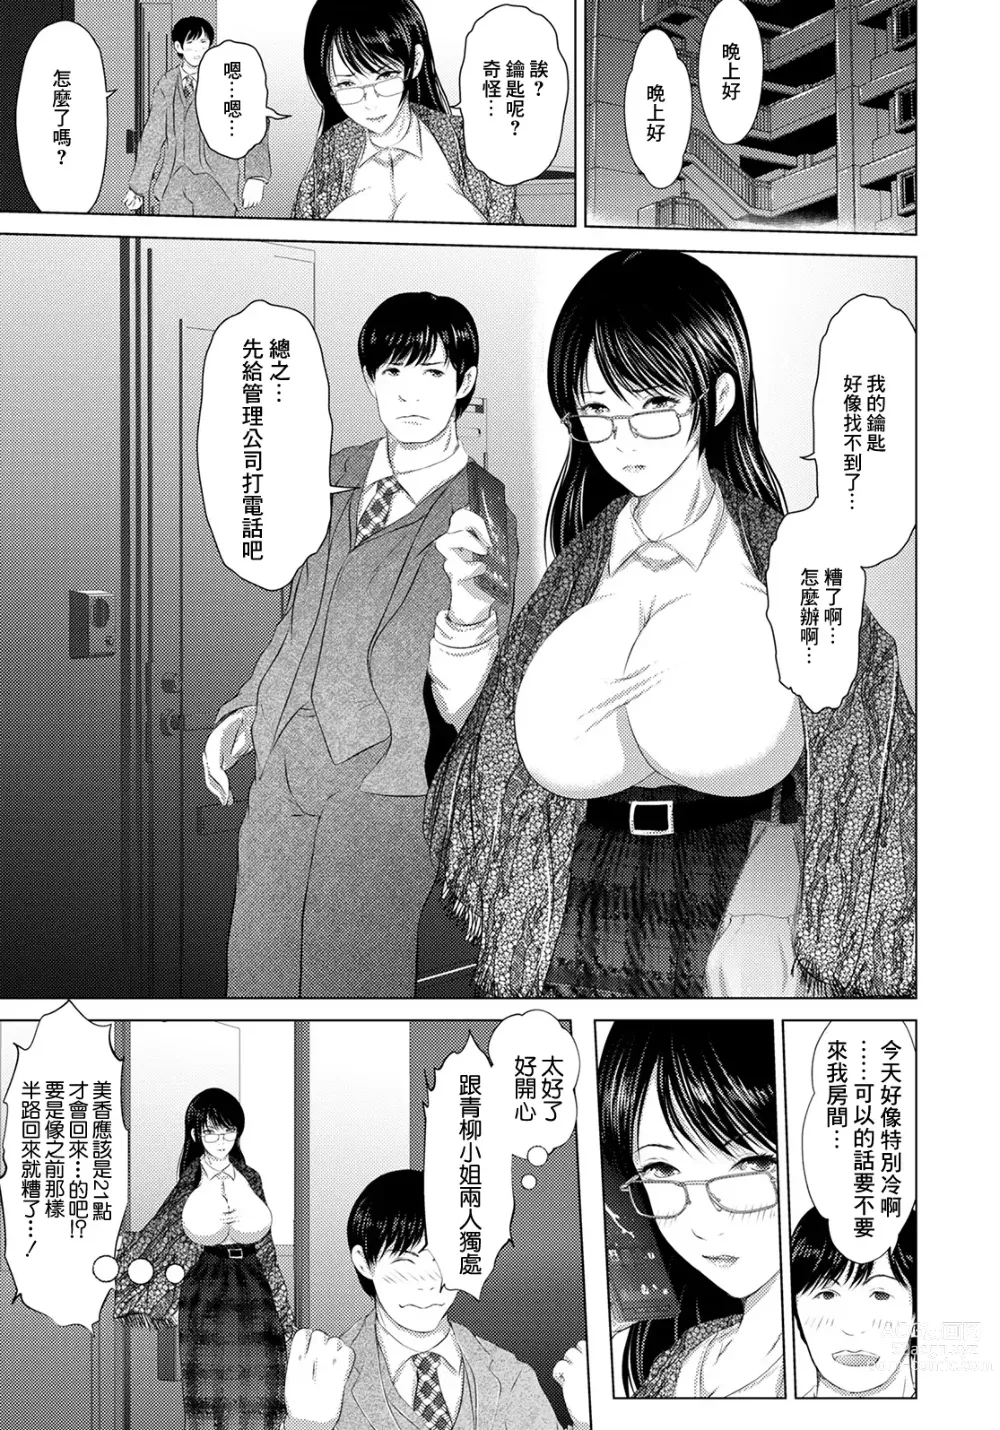 Page 5 of manga Tonari no Onna